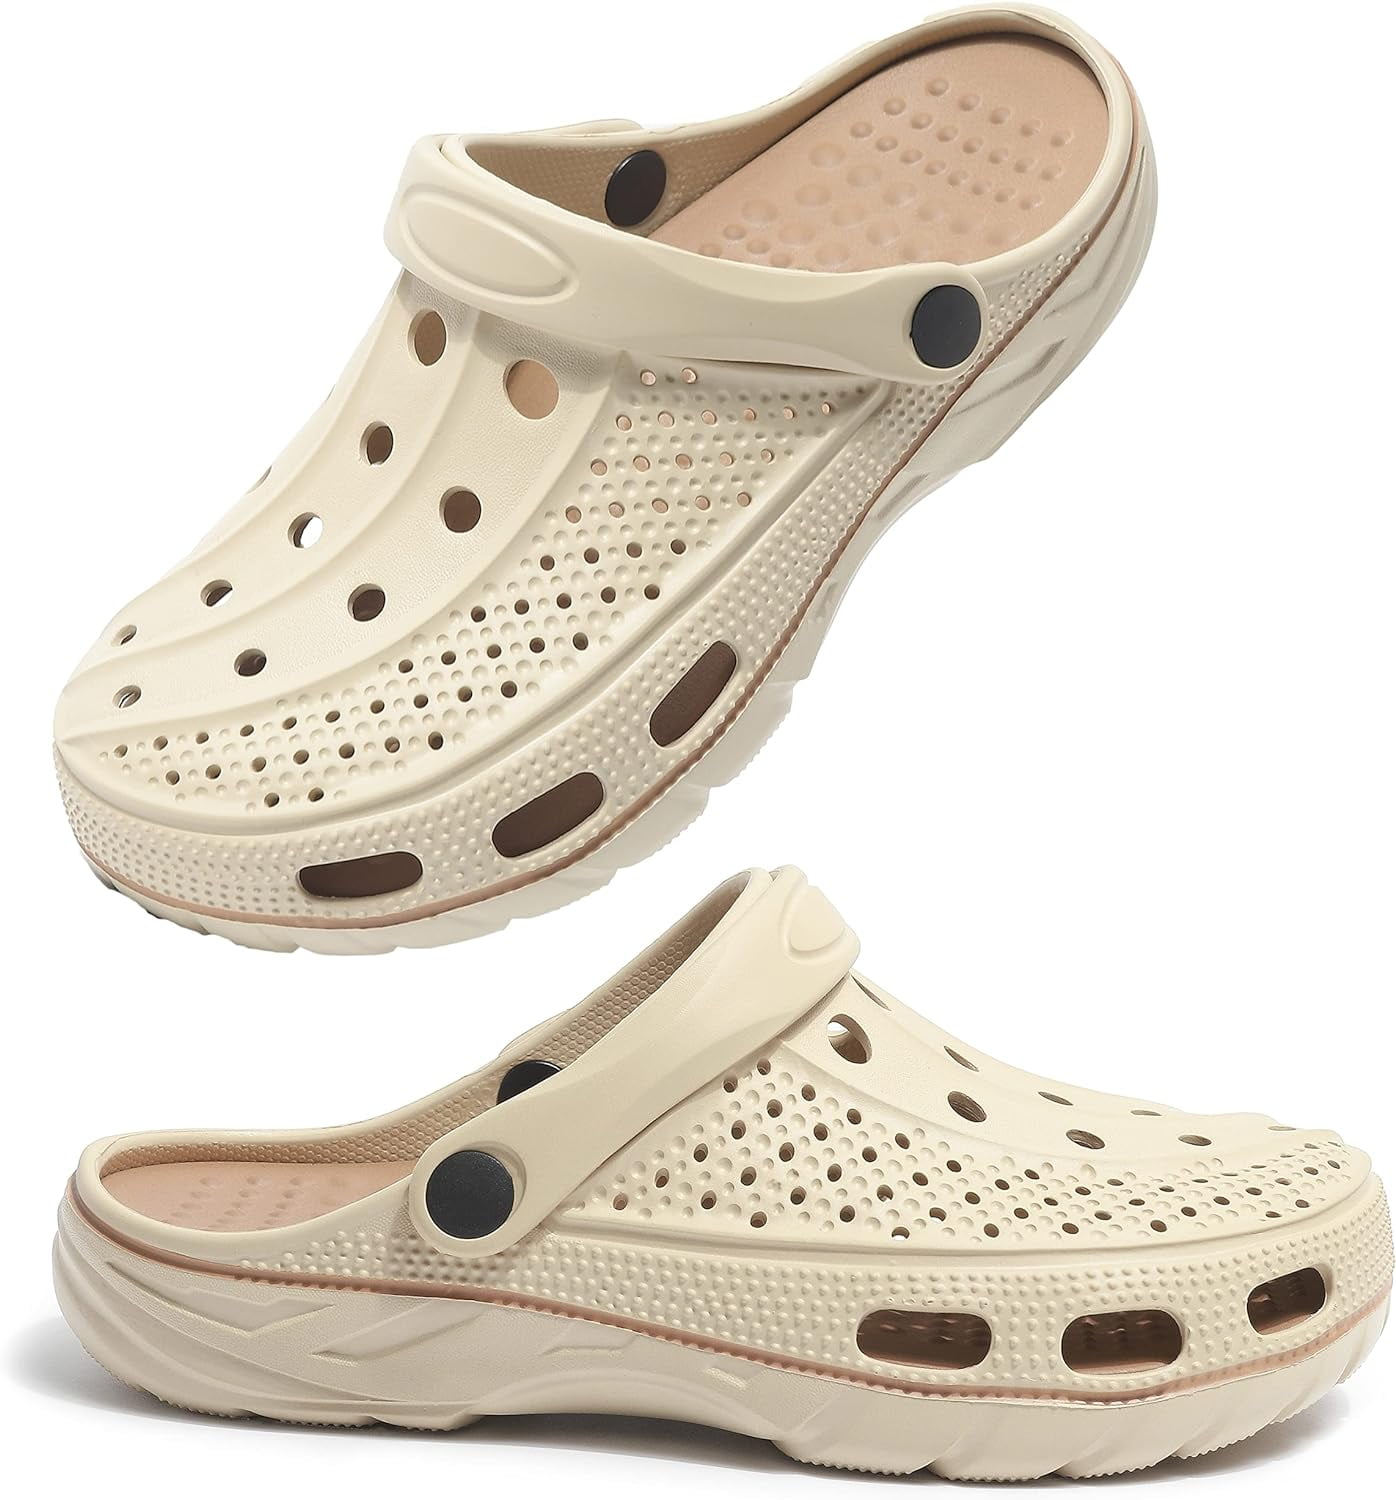 INMINPIN Women Men Orthopedic Clogs Arch Support Garden Shoes Sandals ...